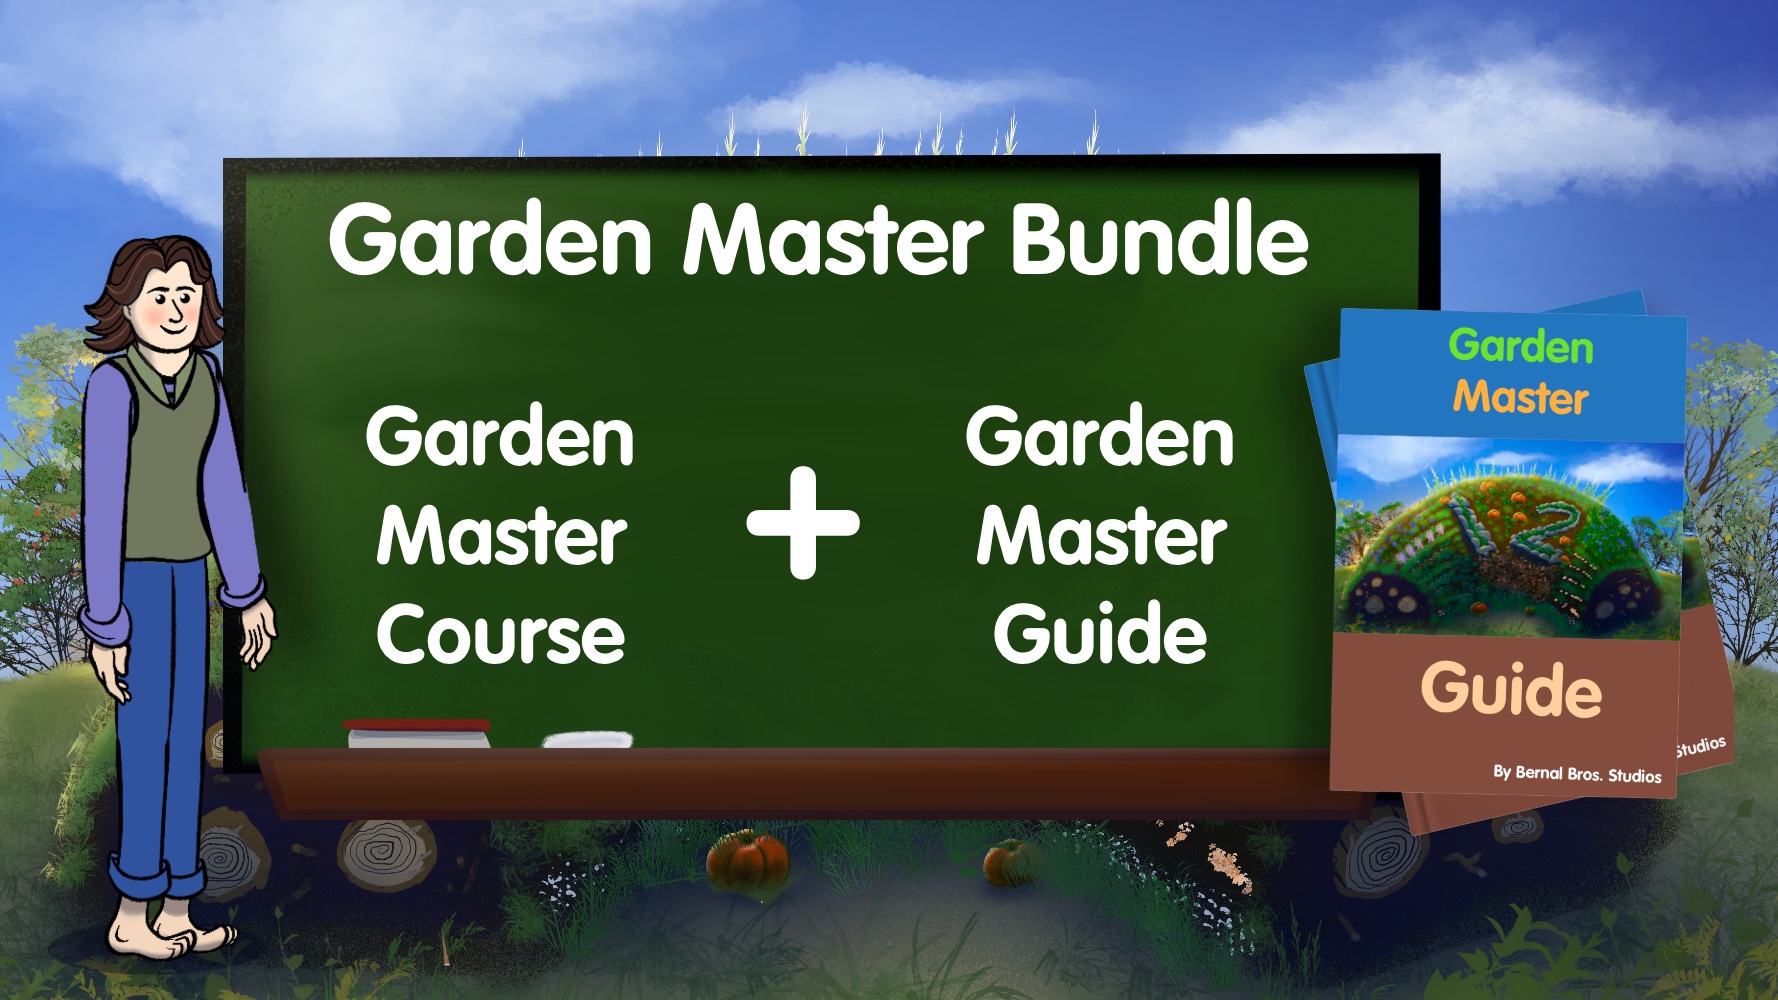 garden master course and guide